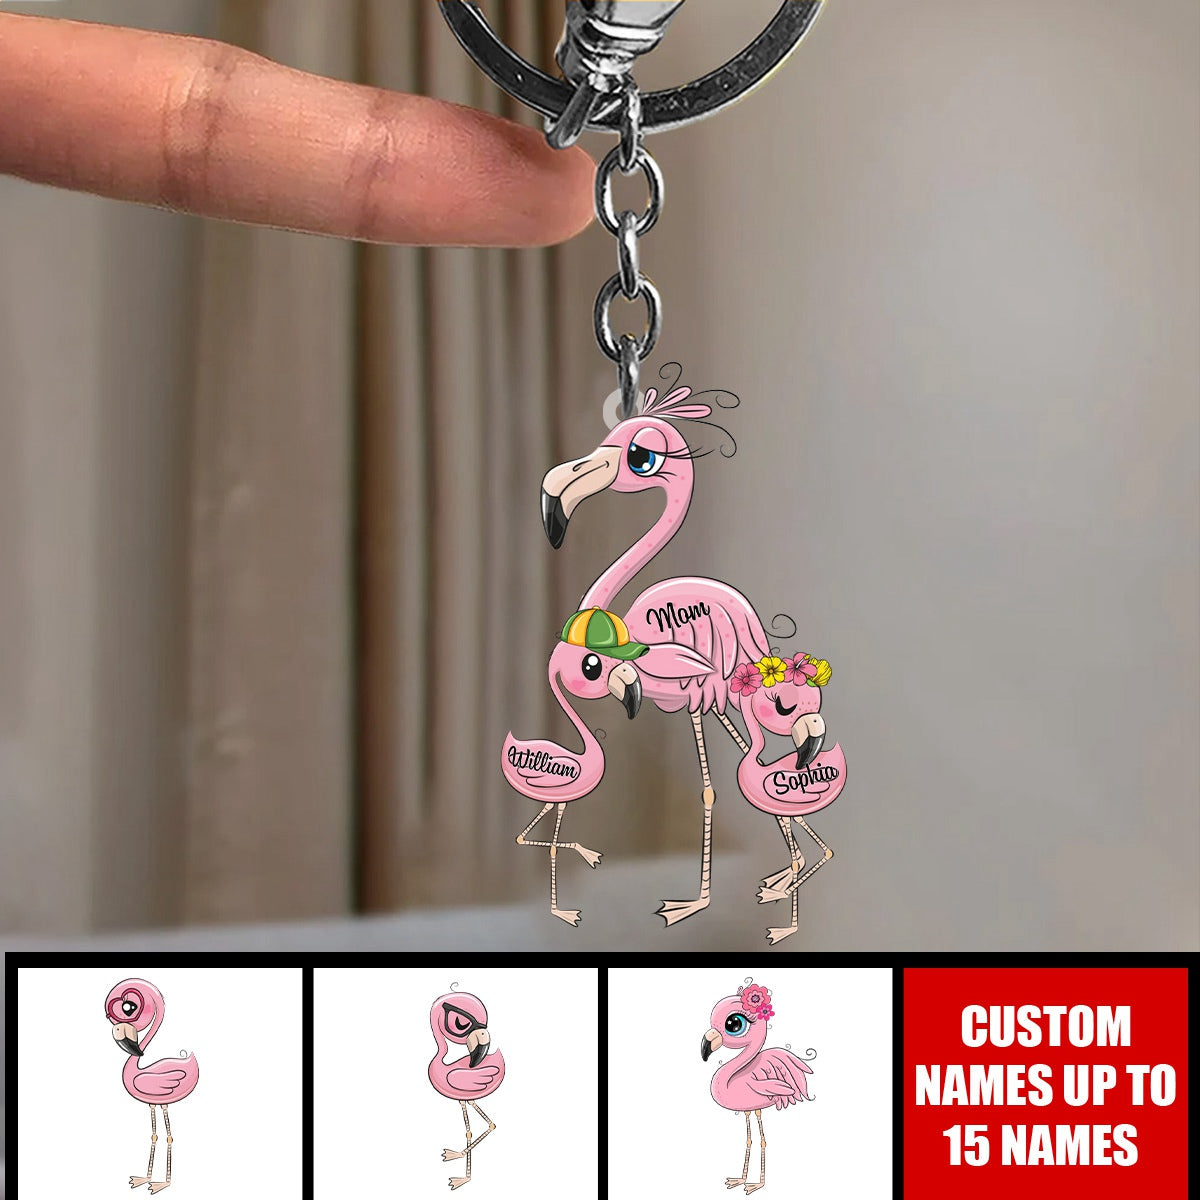 Grandma Love Flamingo - Personalized Acrylic Keychain - Gift For Mom, Grandma